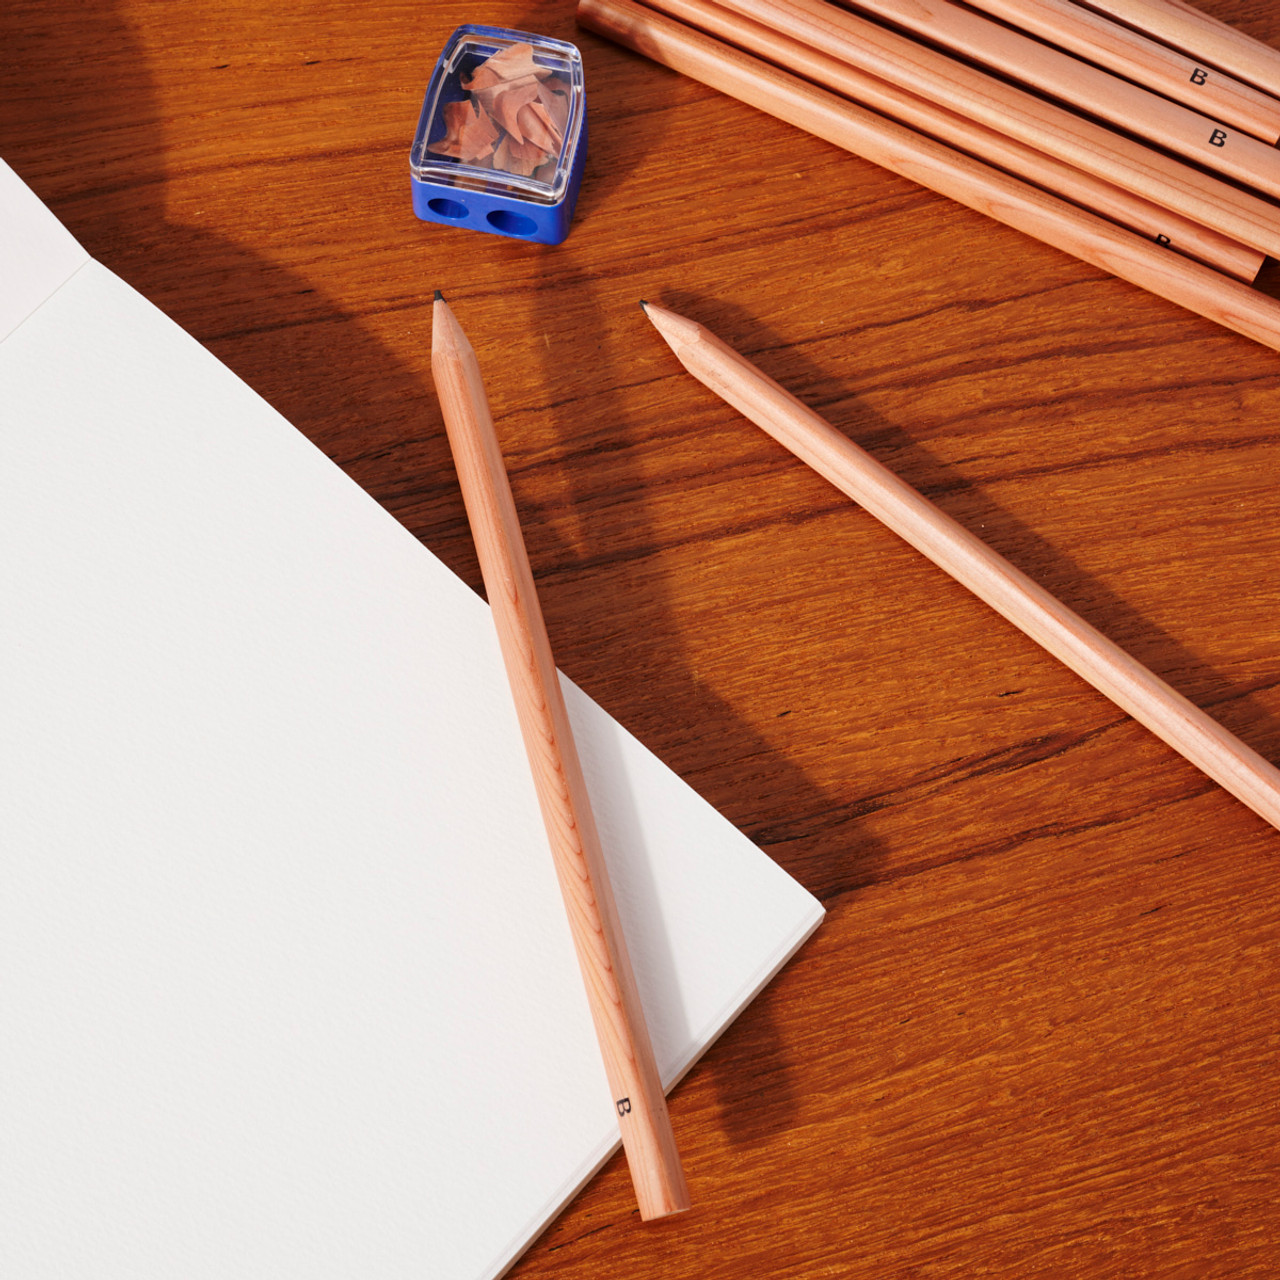 Classic: Adult's Pencil Log Custom Set - Shop kitaboshi-pencil Pencils &  Mechanical Pencils - Pinkoi